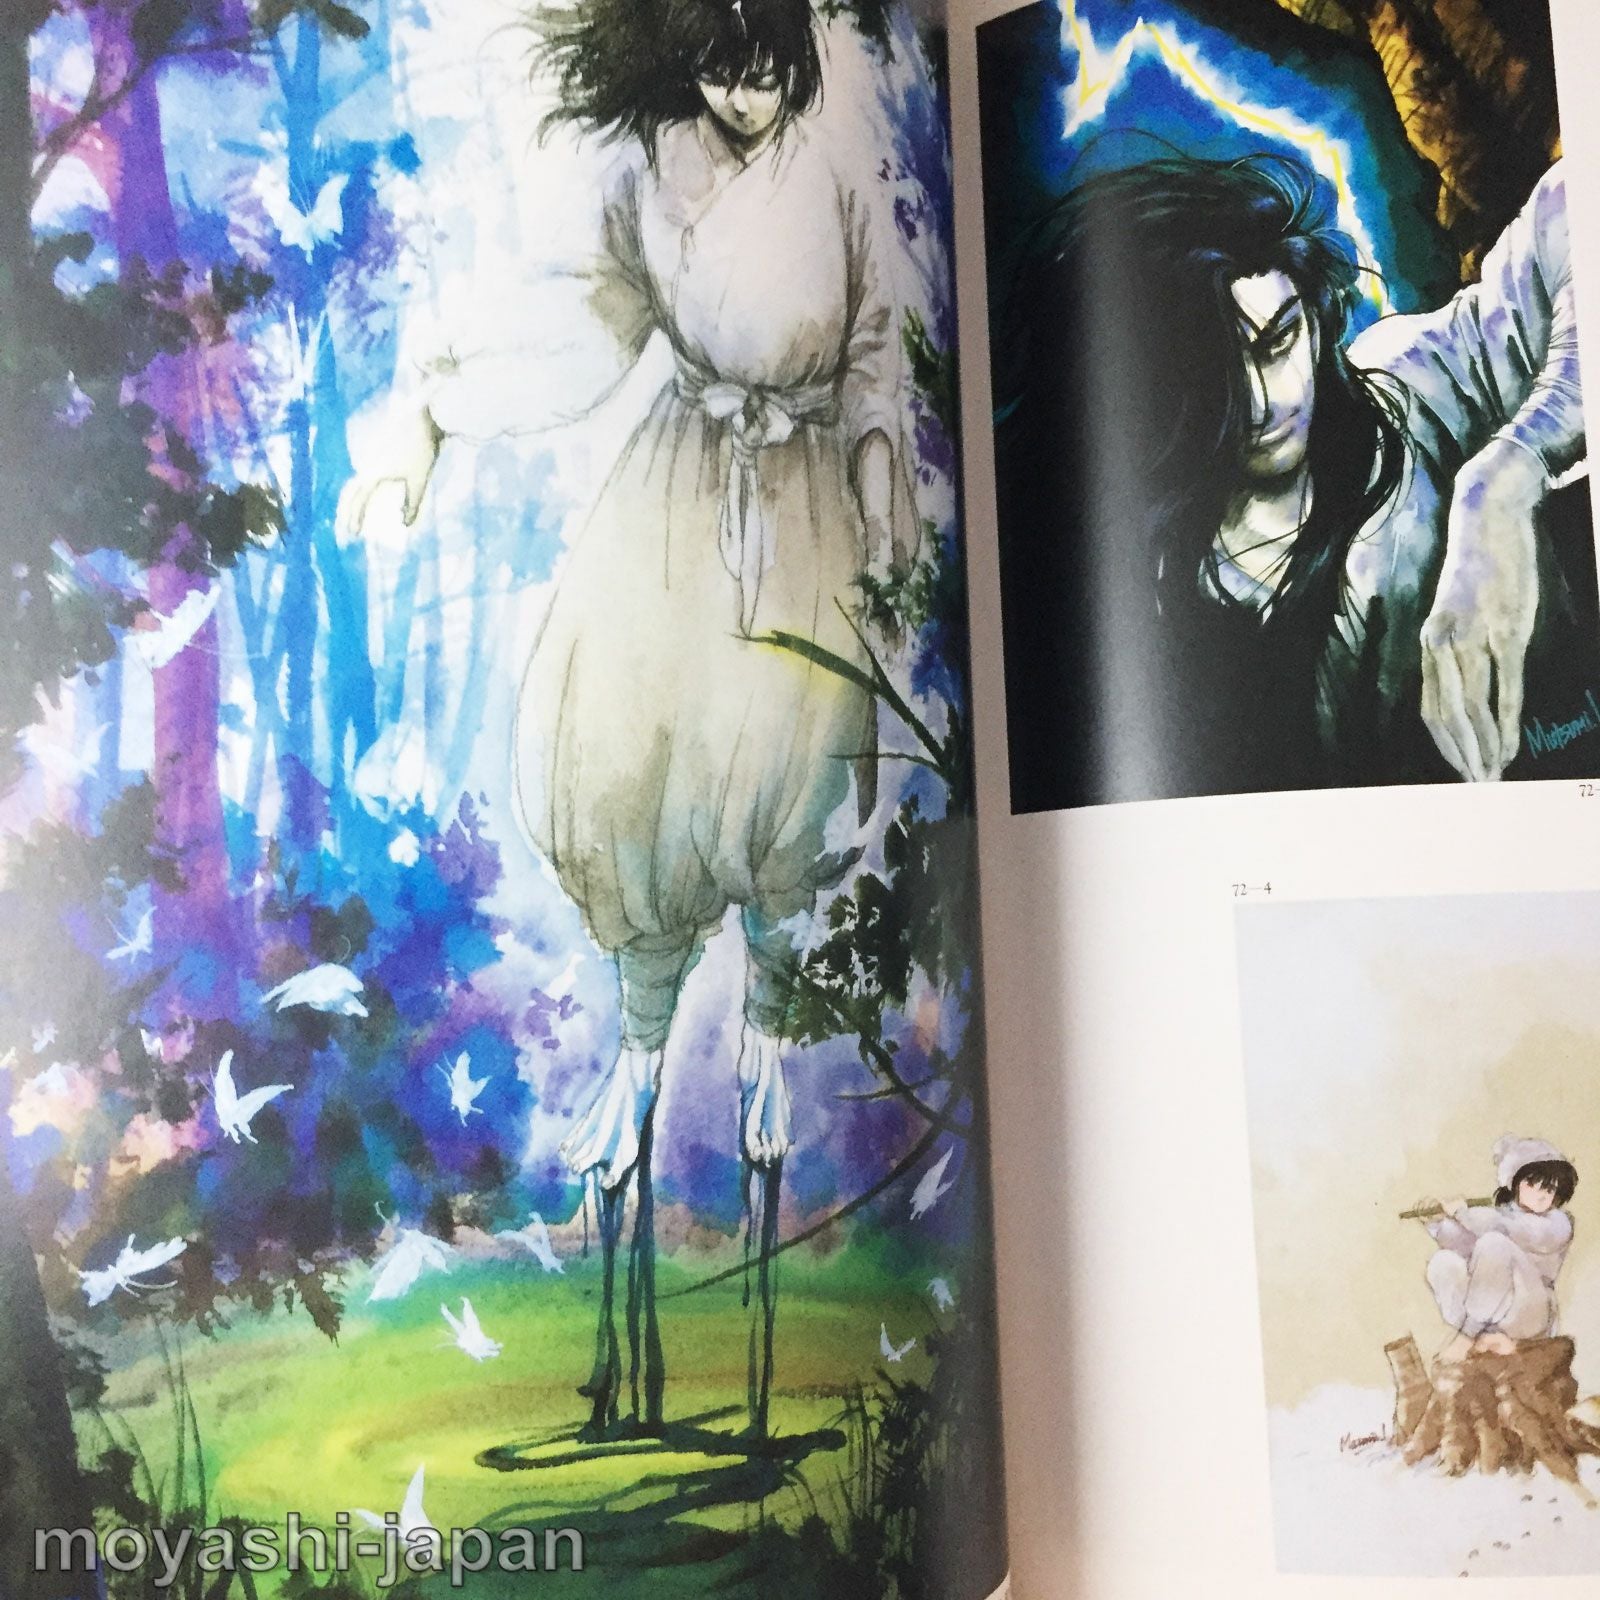 Mutsumi Inomata Illustration ART BOOK ' Utsunomiko' – MOYASHI JAPAN BOOKS